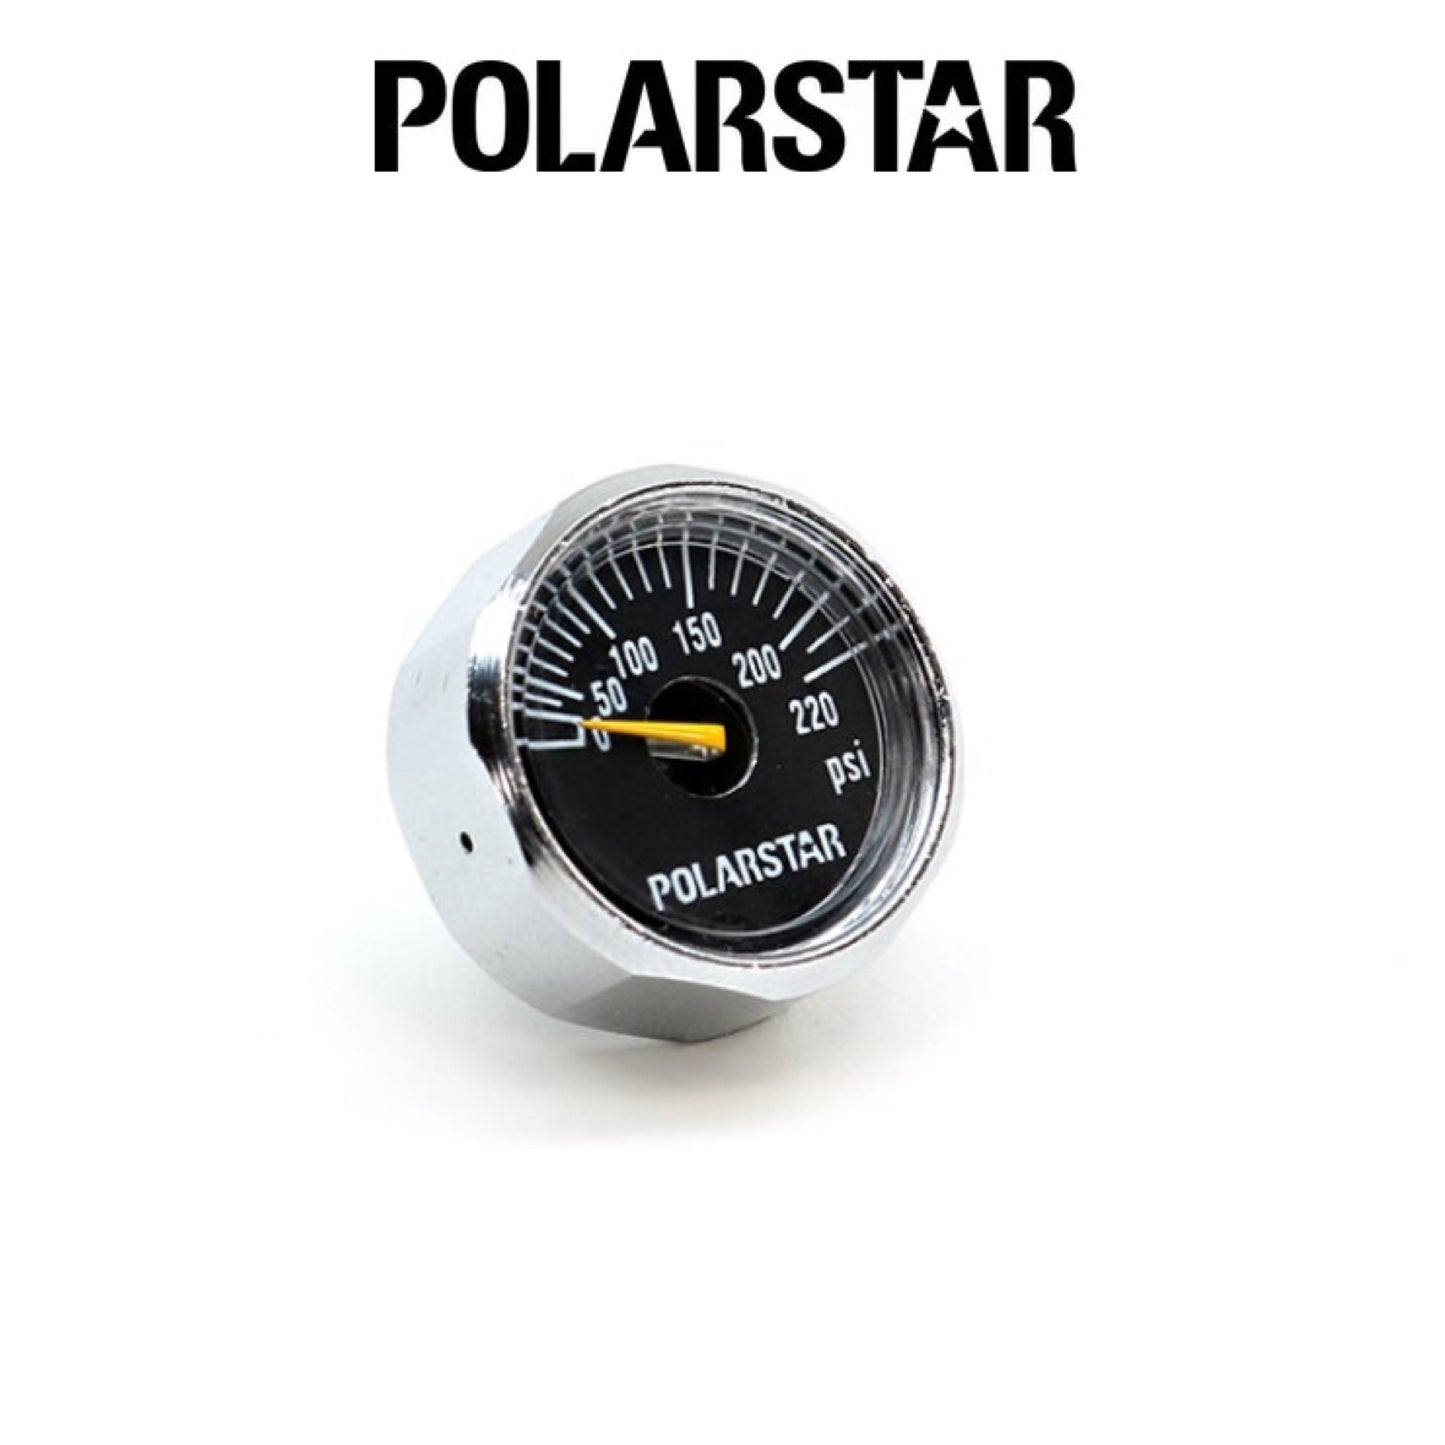 Polarstar Regulator Gauge, 0-220 PSI - Gel Blaster Parts & Accessories For Sale